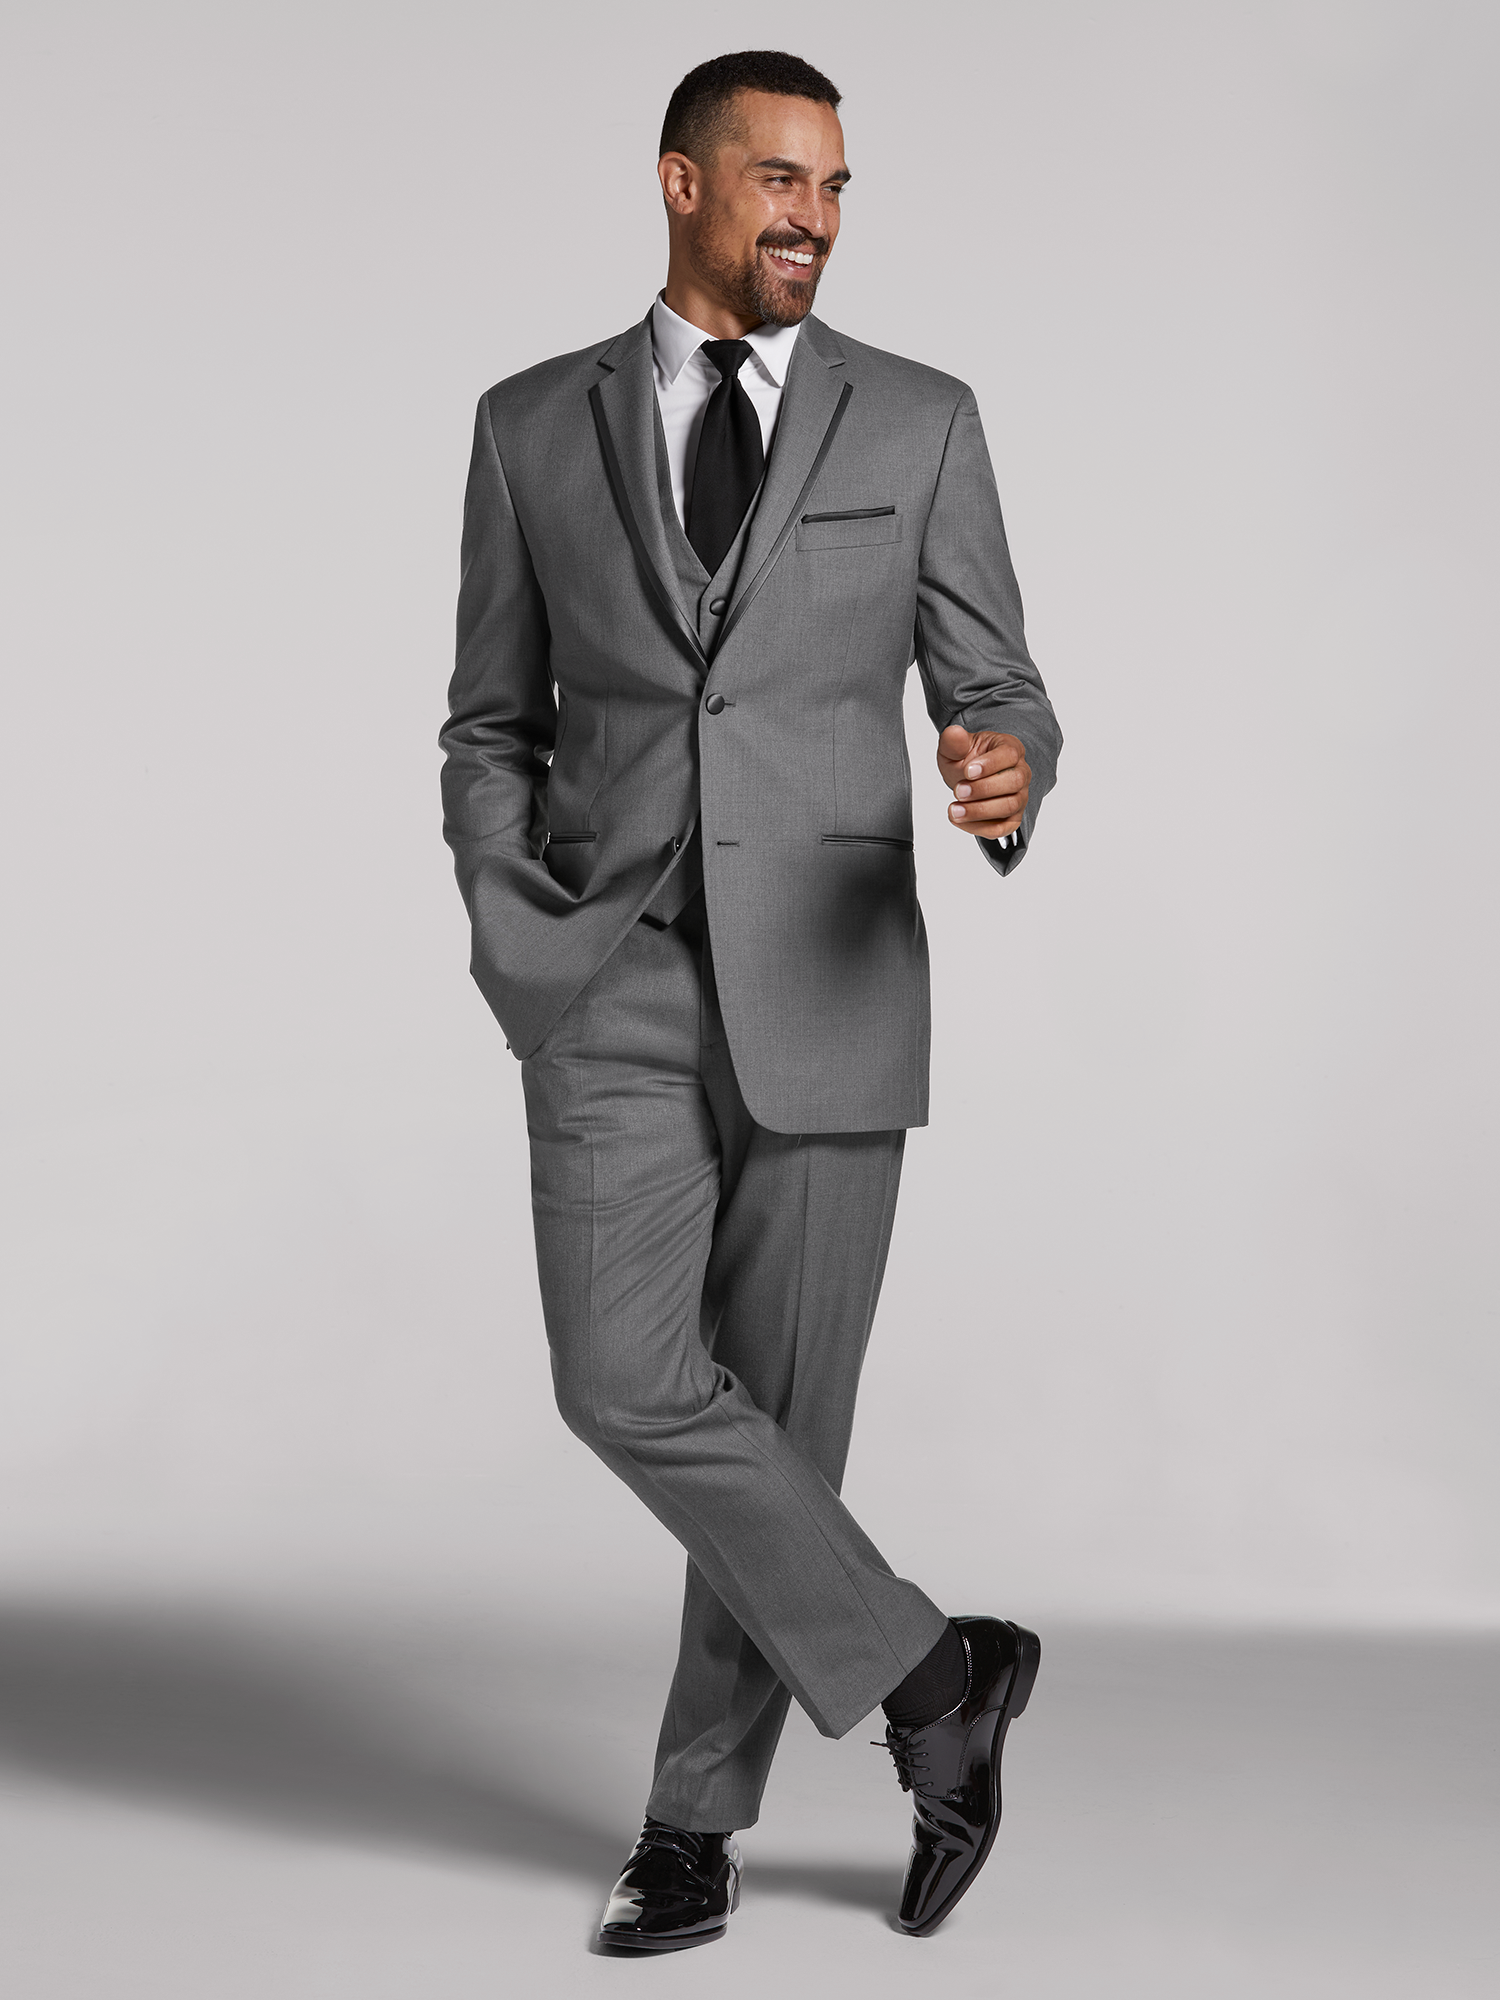 Men 2 Piece Suit Grey Tuxedo Suit Perfect for Wedding One Button Suits,  Tuxedo Suits, Dinner Suits, Wedding Groom Suits, Bespoke for Men -   Canada